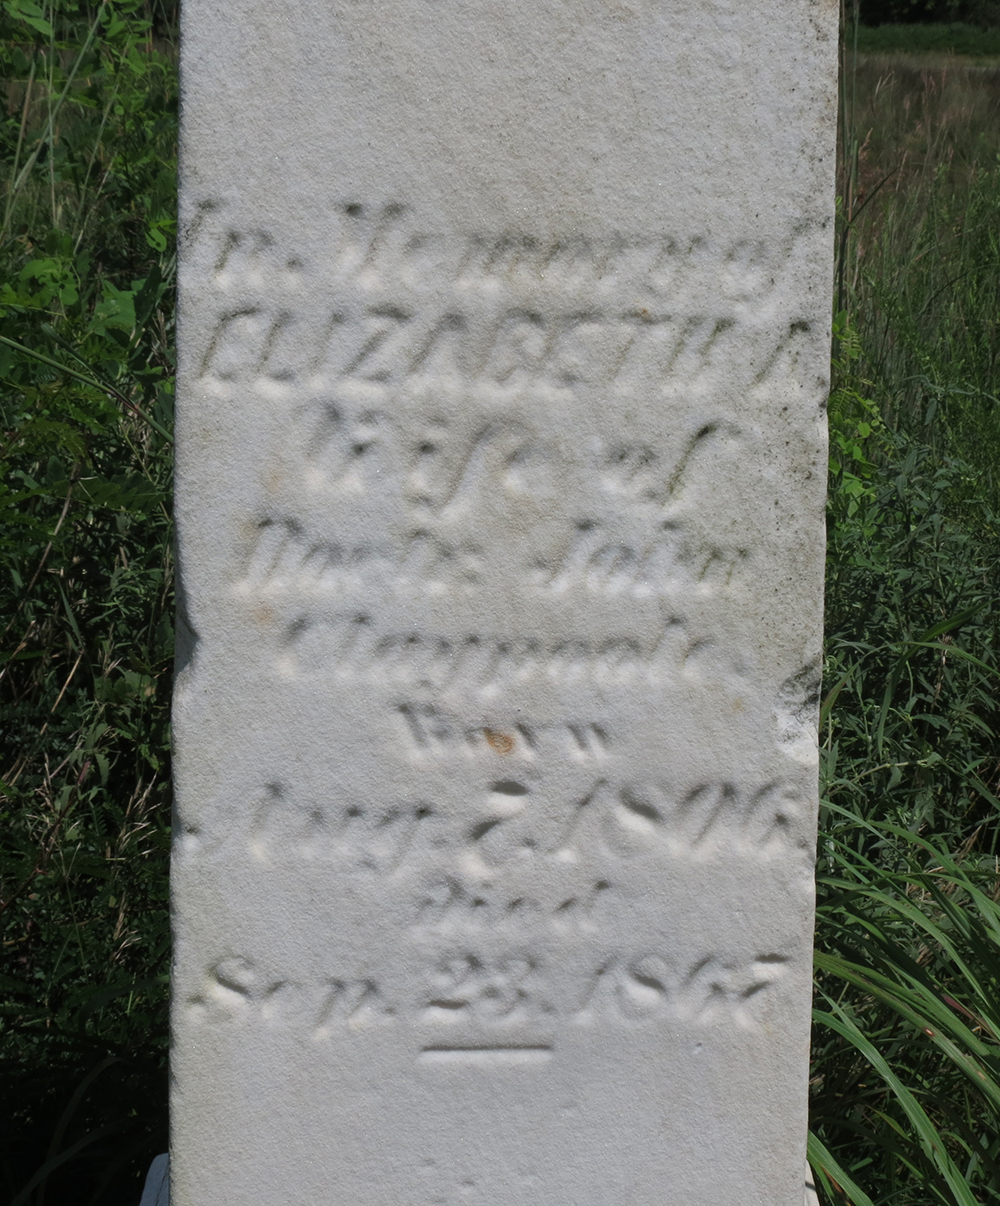 The grave of William B. Whiteside